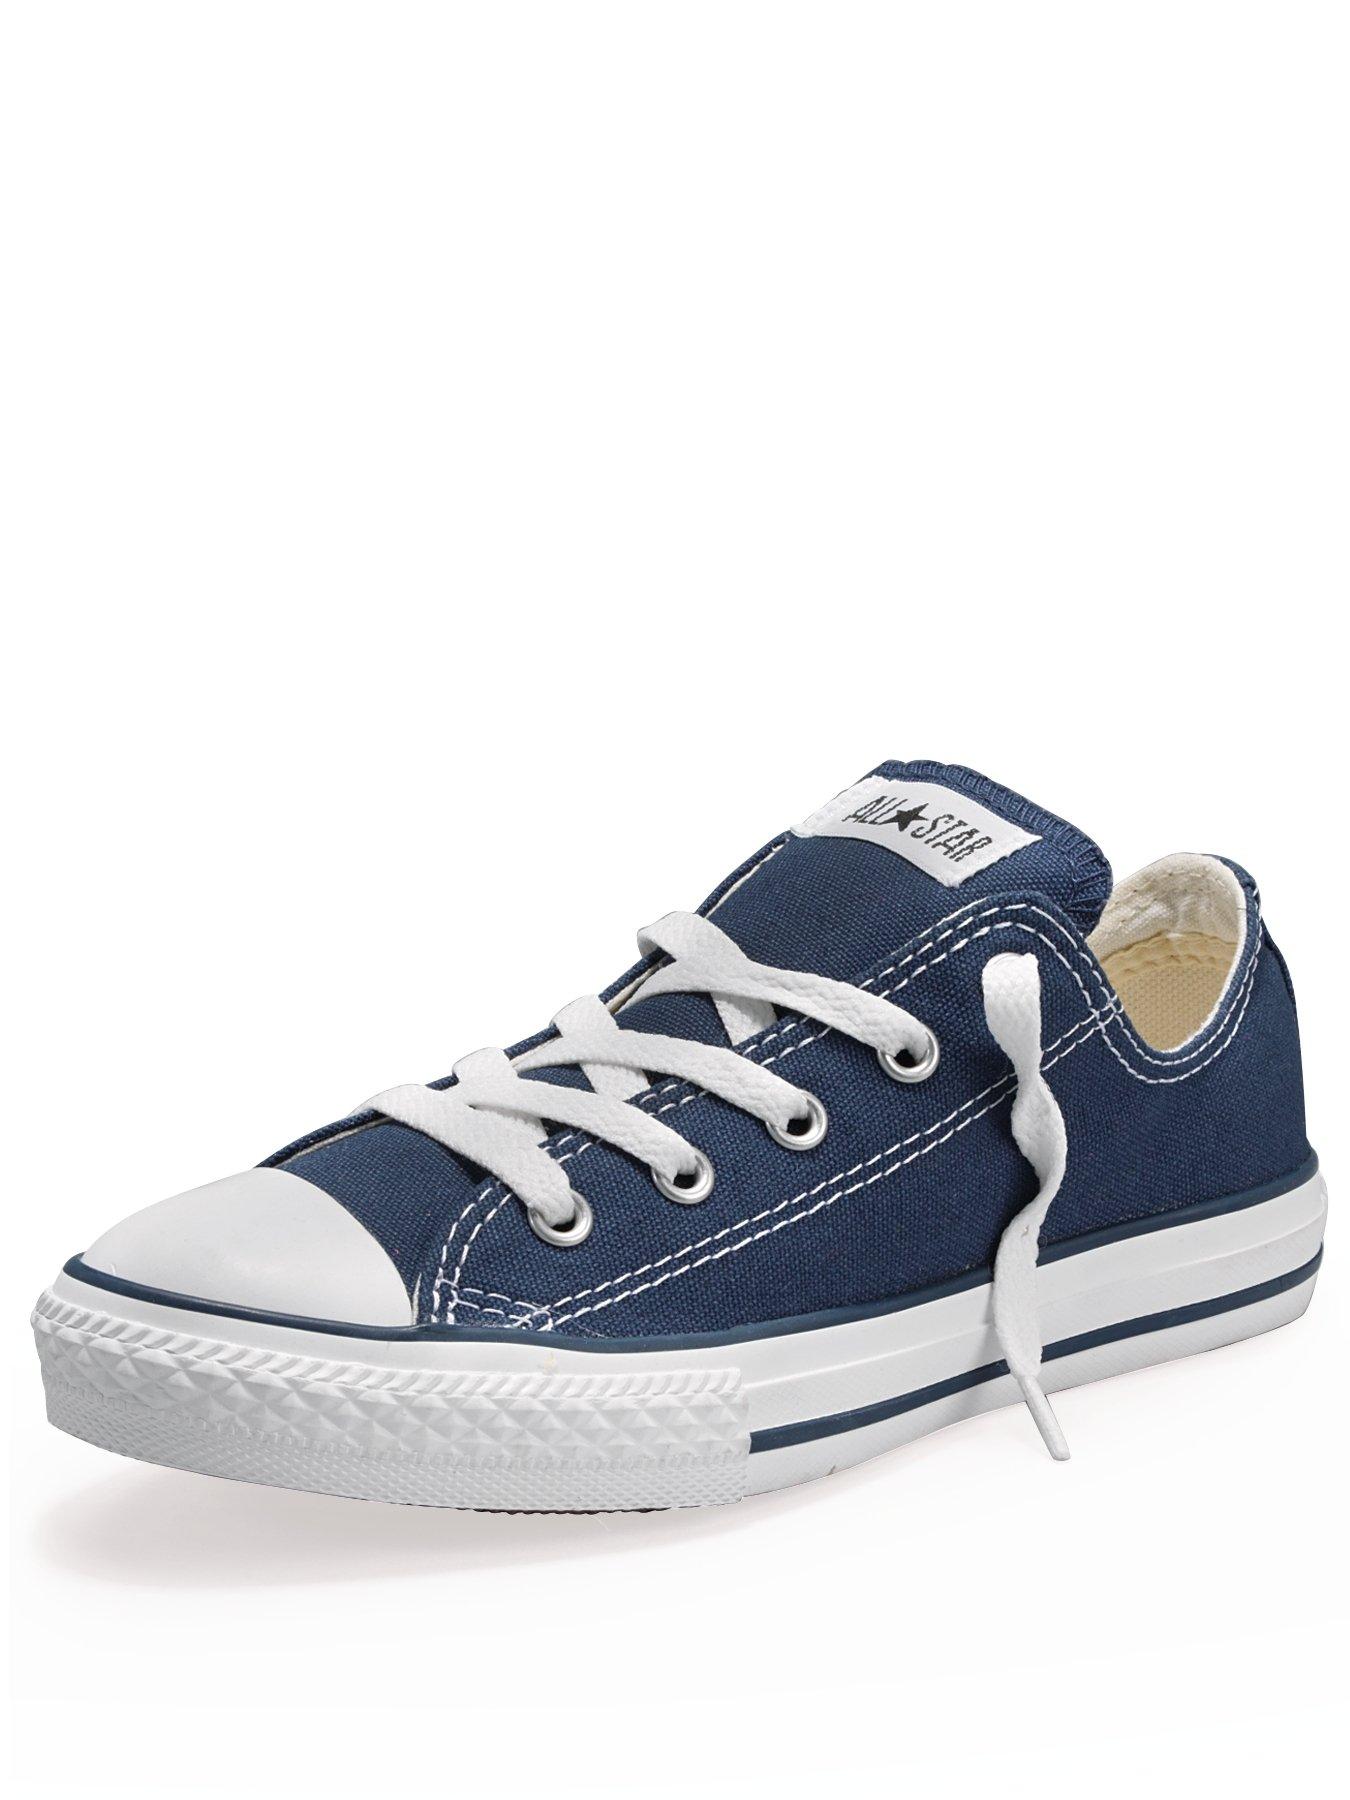 boys grey converse shoes